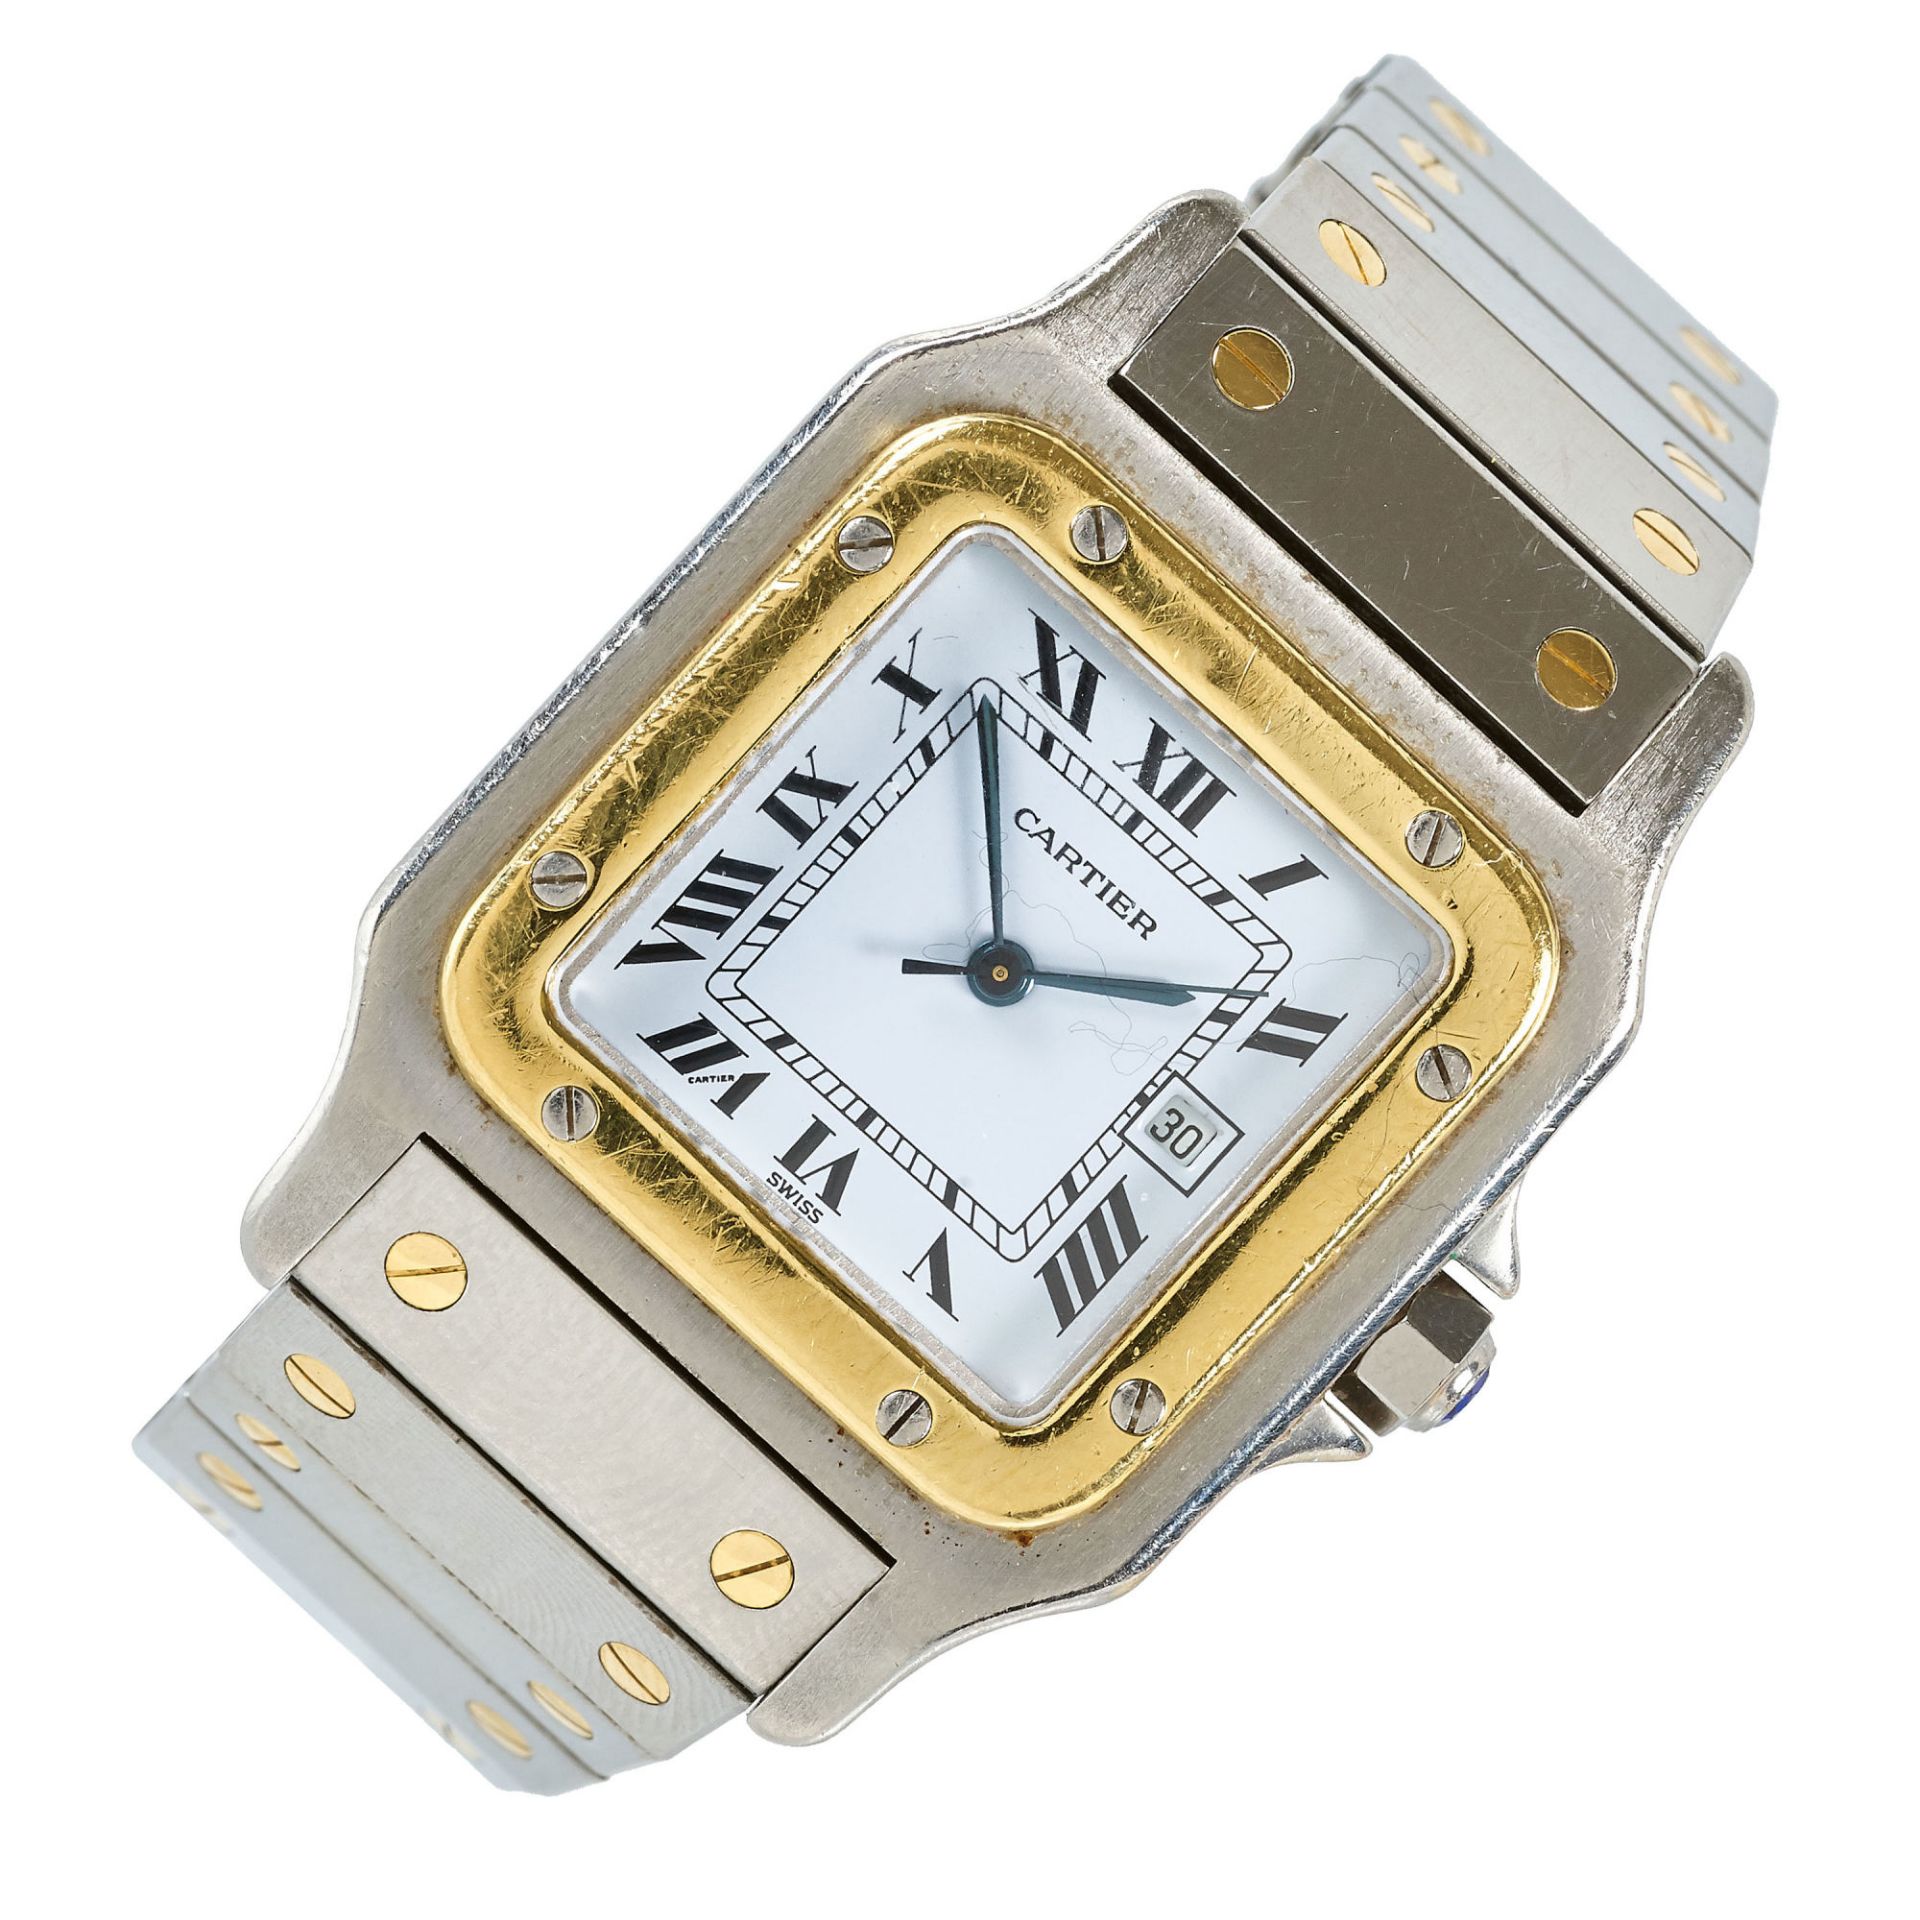 CARTIER: Herrenarmbanduhr "Santos". / Cartier, Gentleman's wristwatch Santos.